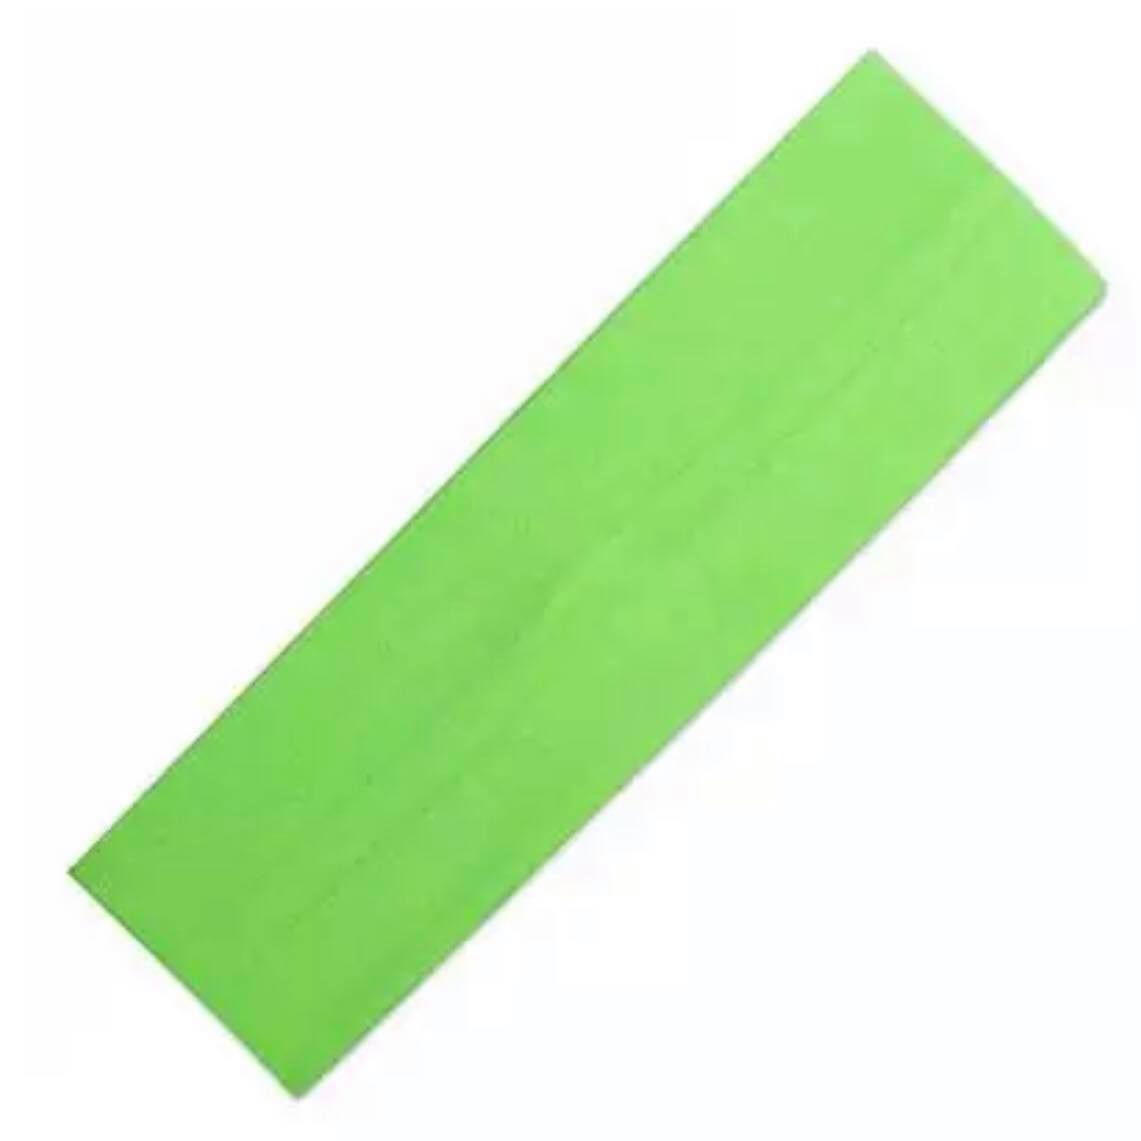 Stretch Headband for School, Sport, Yoga Headbands School Ponytails Fluoro Green 